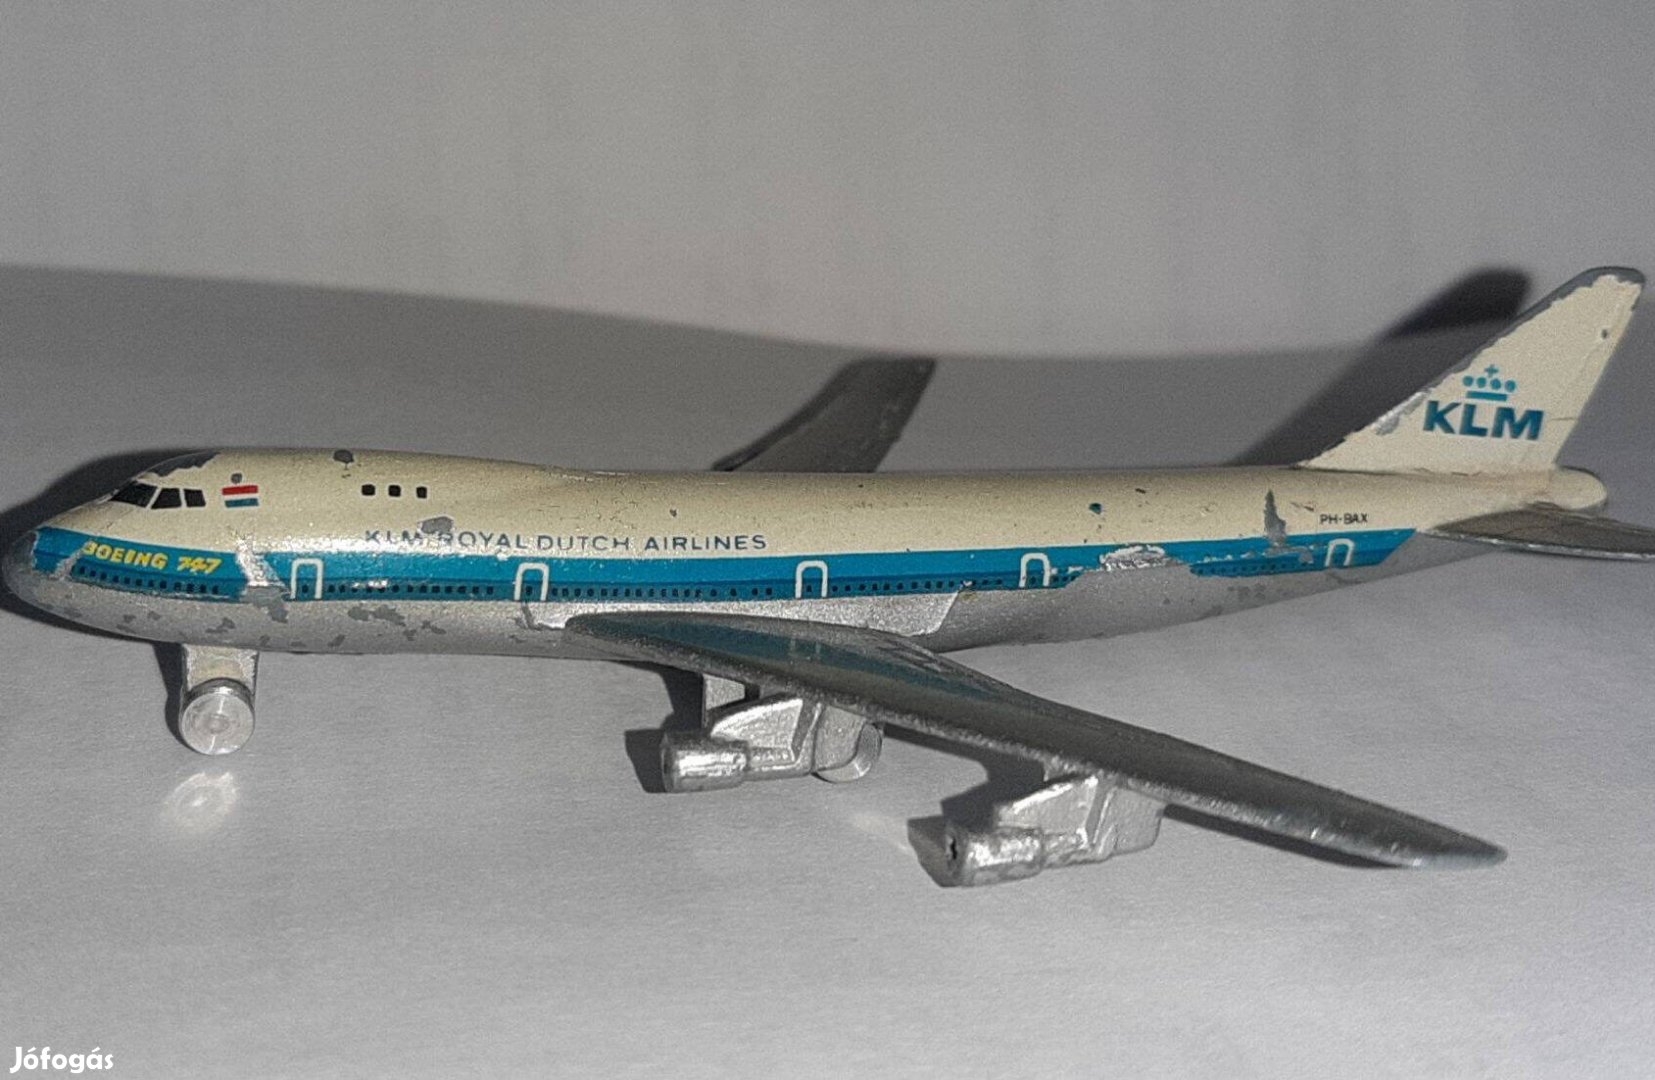 Retro Schuco Fém Boing 747 KLM repülőgép makett modell